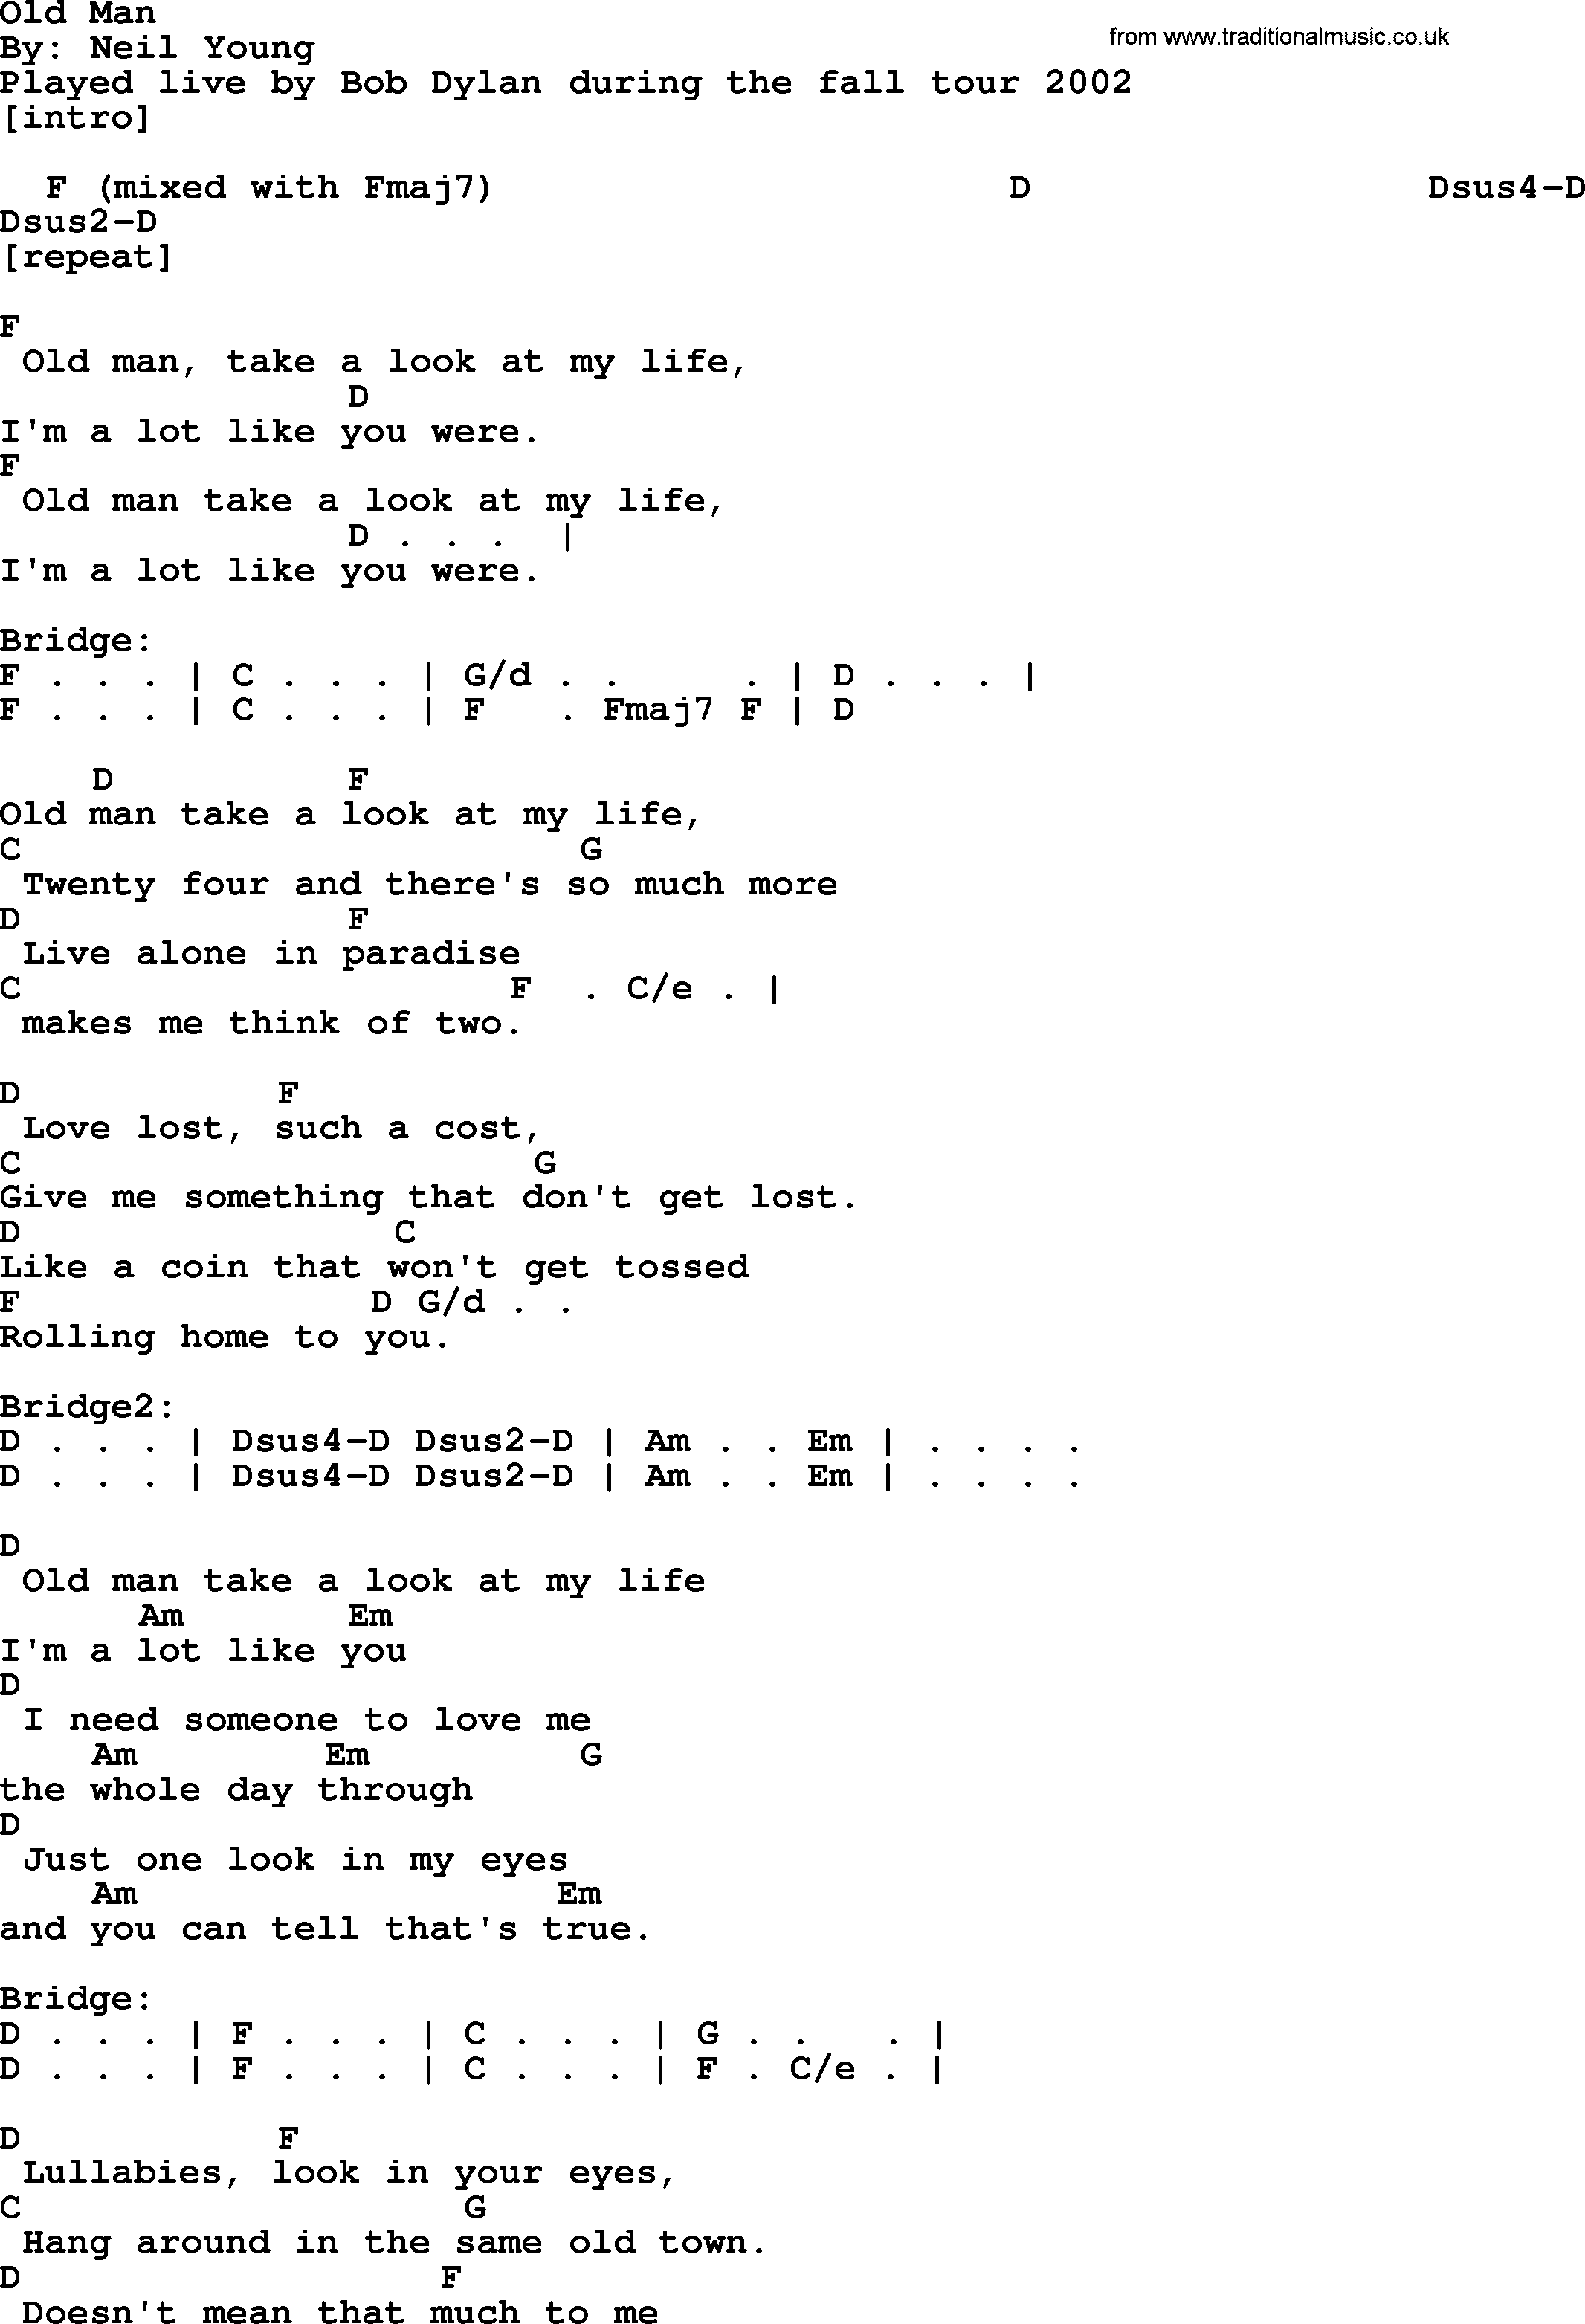 Bob Dylan song, lyrics with chords - Old Man